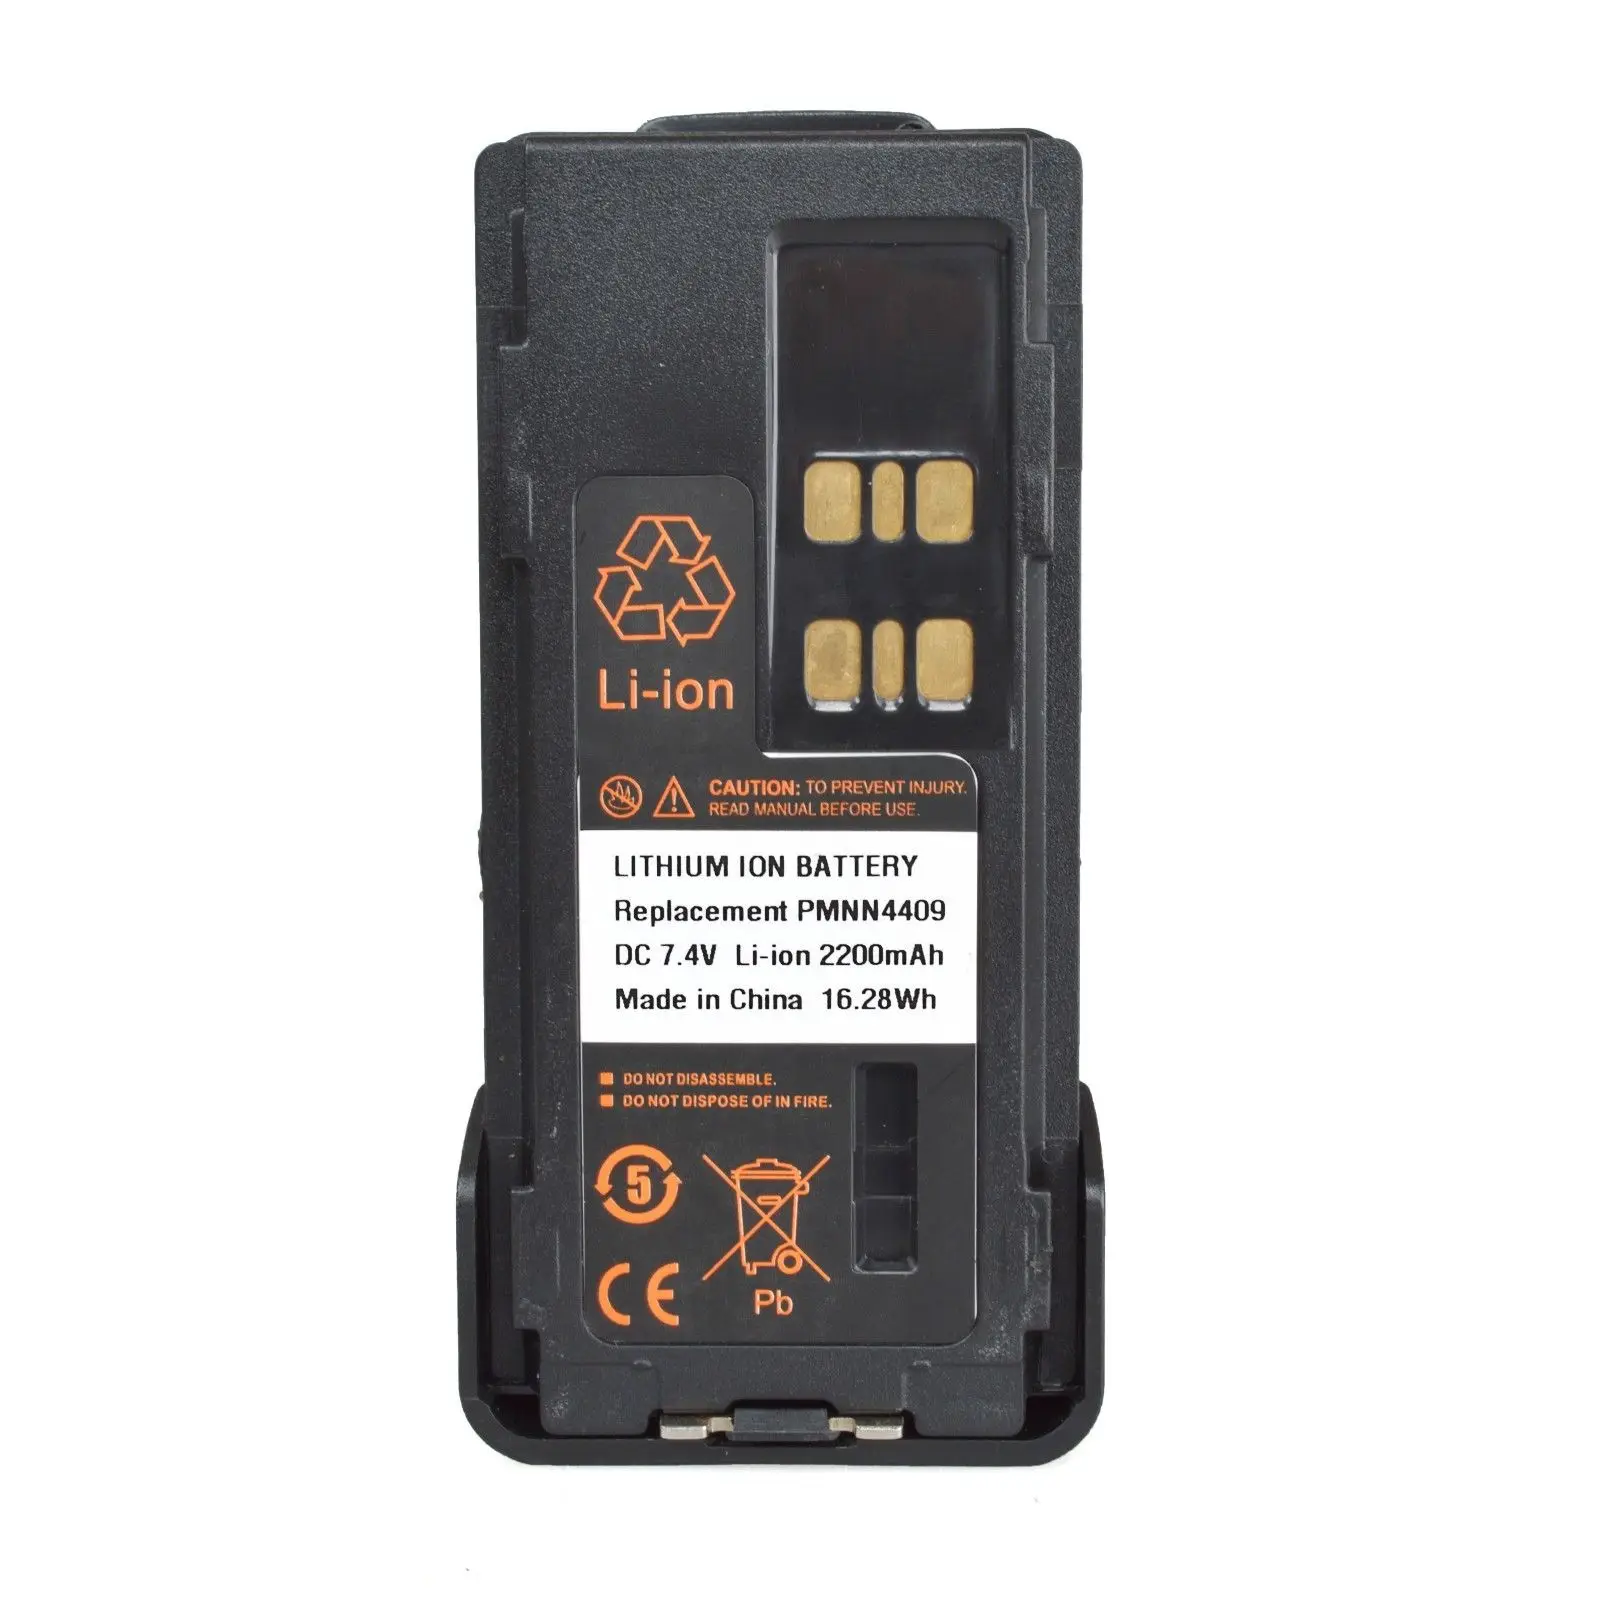 

PMNN4409 Battery for Motorola XPR7350 XPR7380 XPR7550 XPR7580 DP4400 DP4400e DP4600 DP4600e DGP8050 DGP5050 Portable Radio